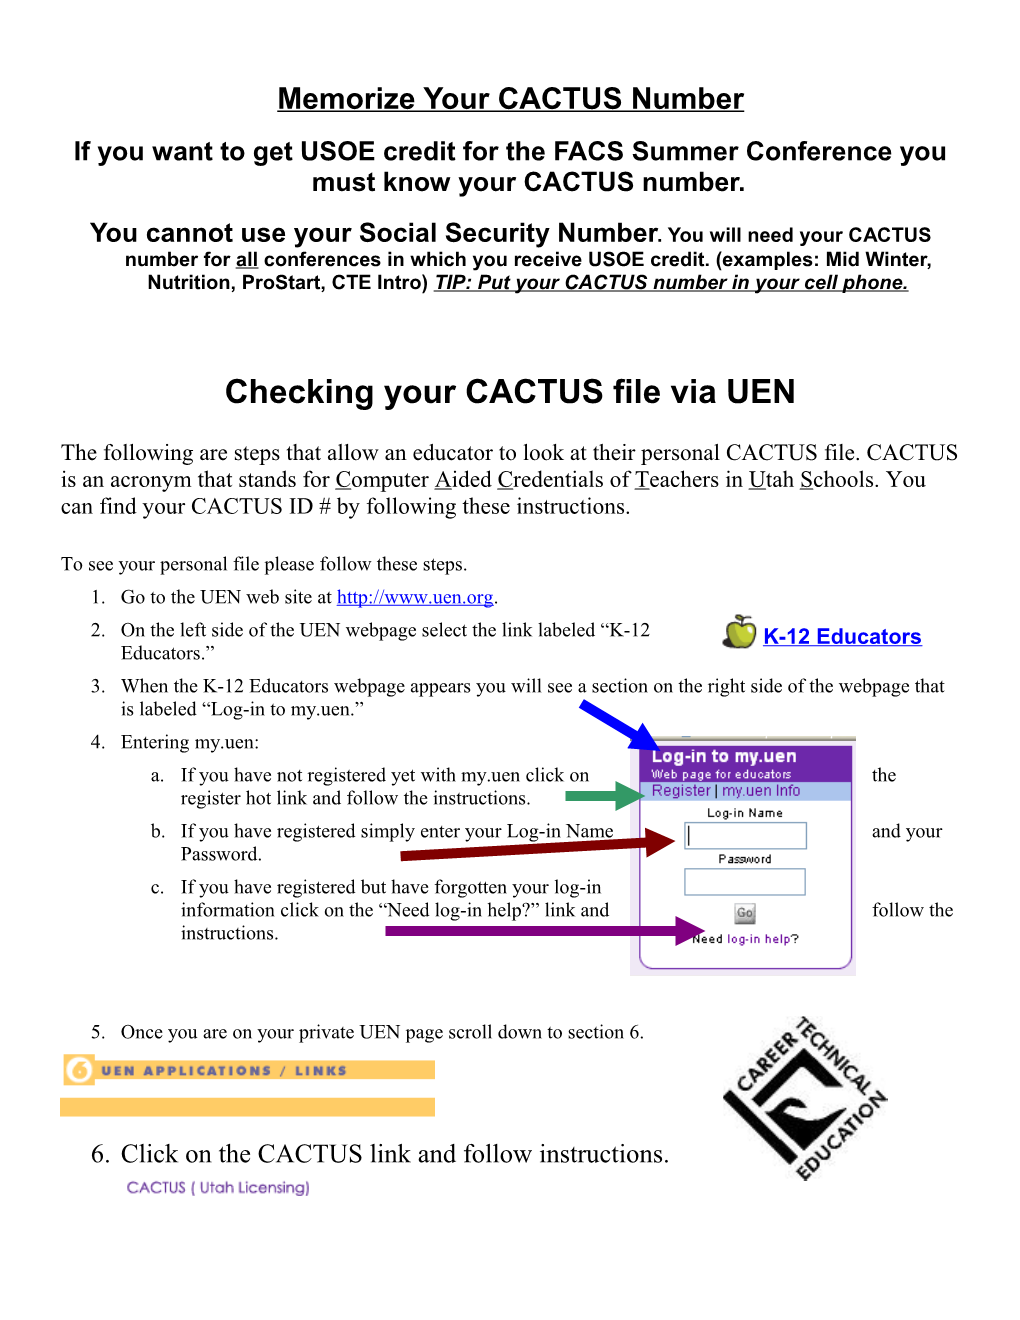 Checking Your CACTUS File Via UEN